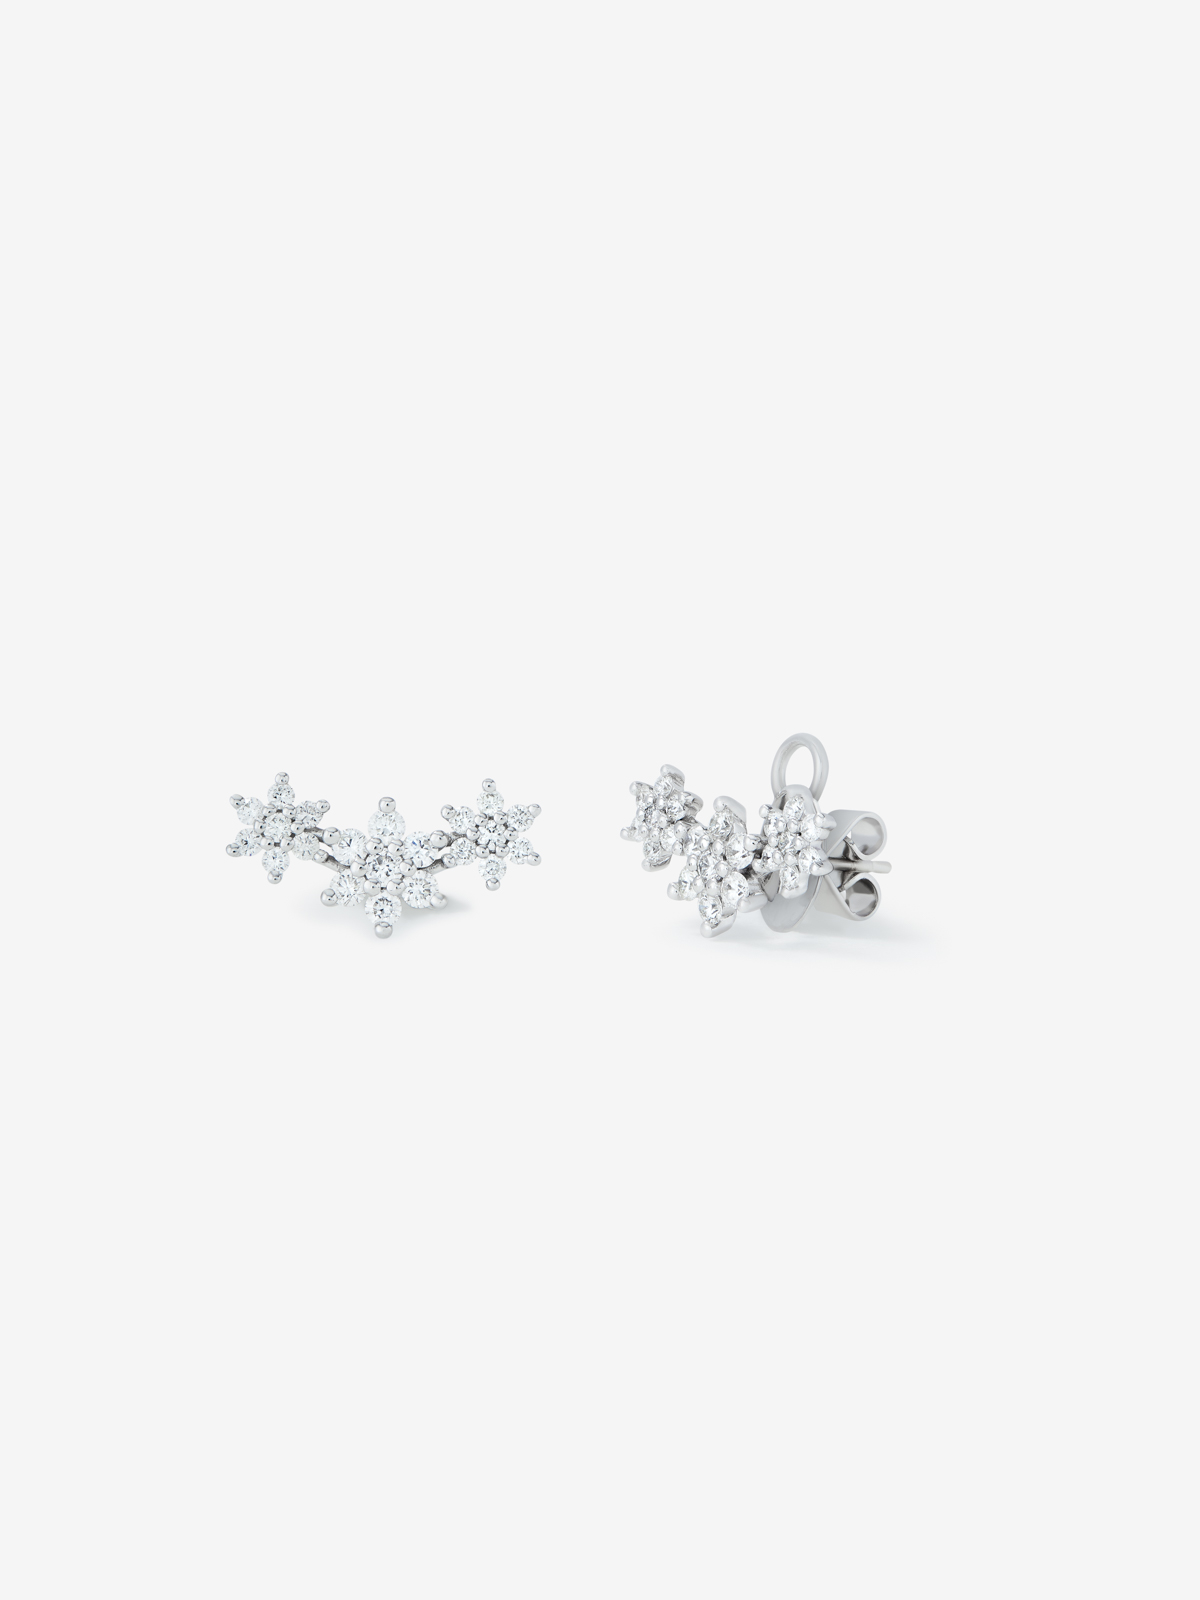 18K White Gold Flower Climber Earrings with Diamonds